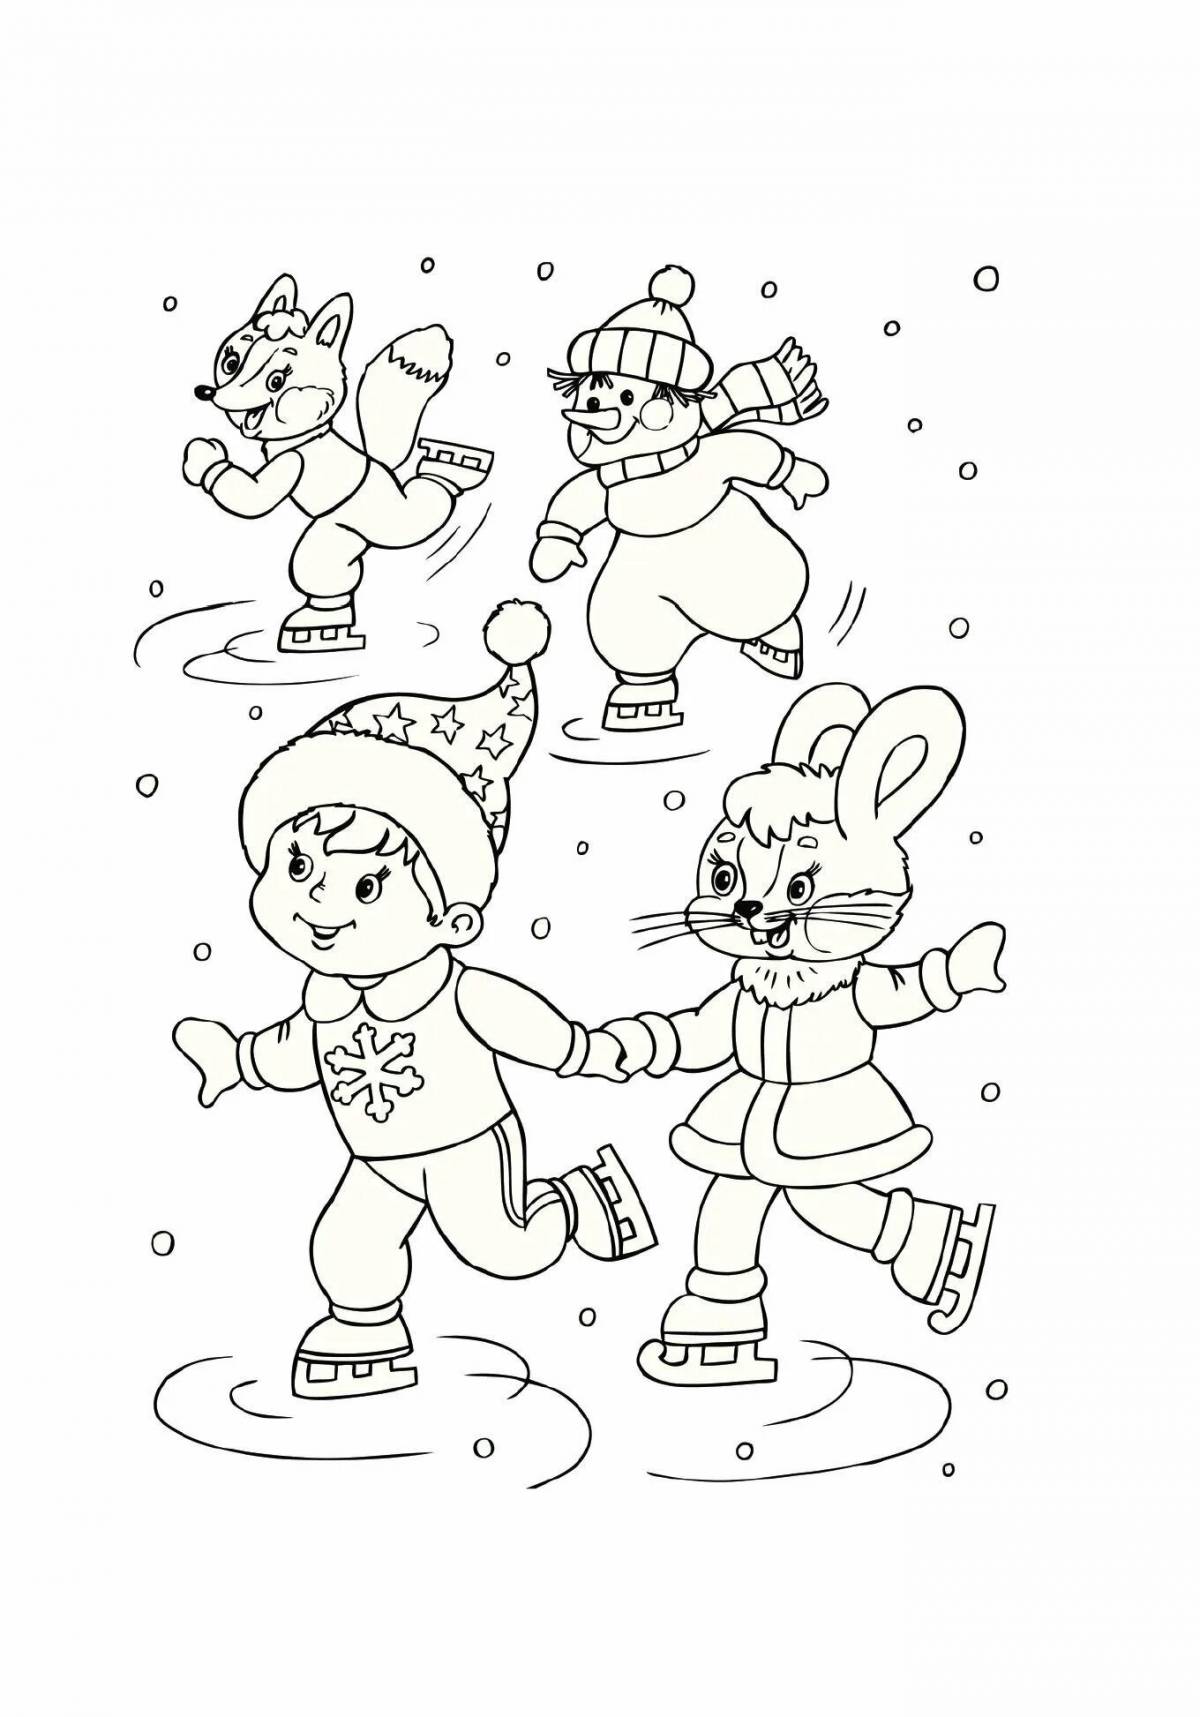 Dazzling santa claus and bunny coloring book